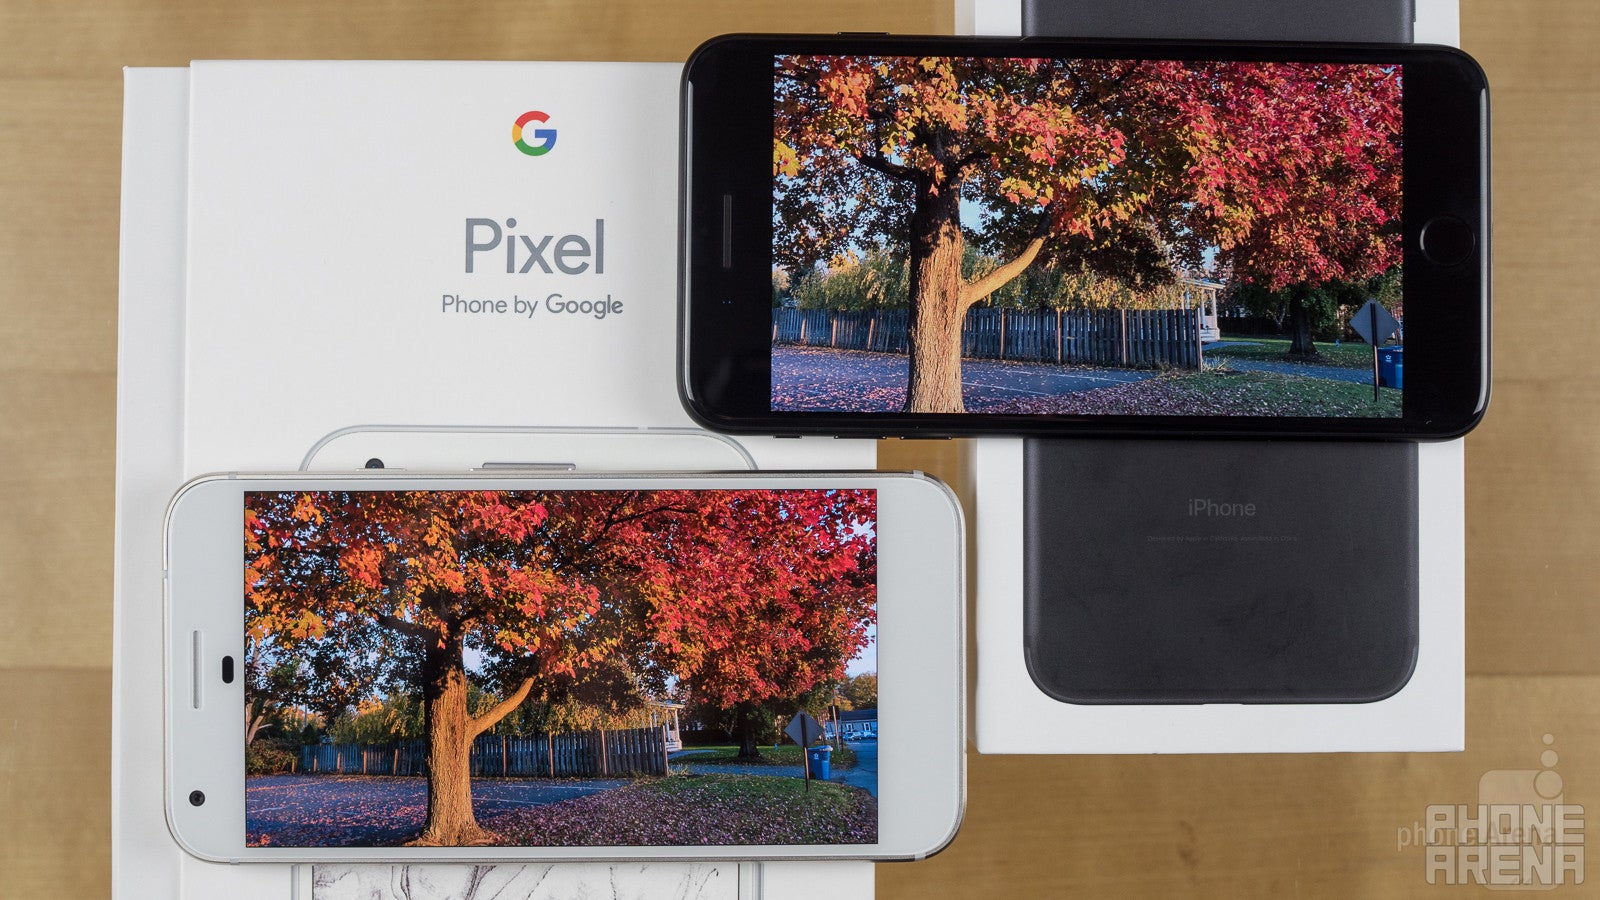 Google Pixel XL vs Apple iPhone 7 Plus